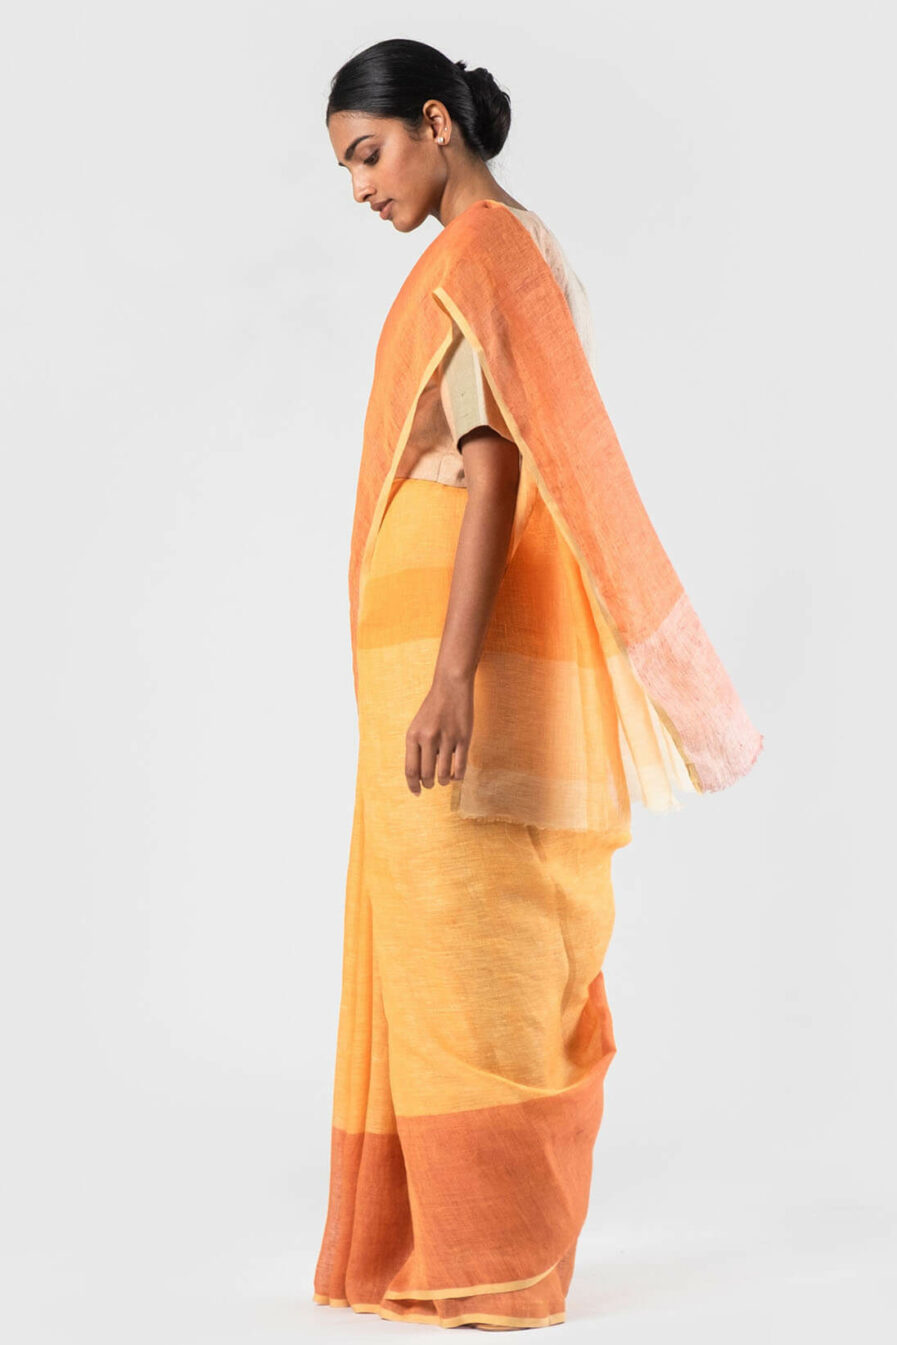 Anavila Tan and tangerine linen sari